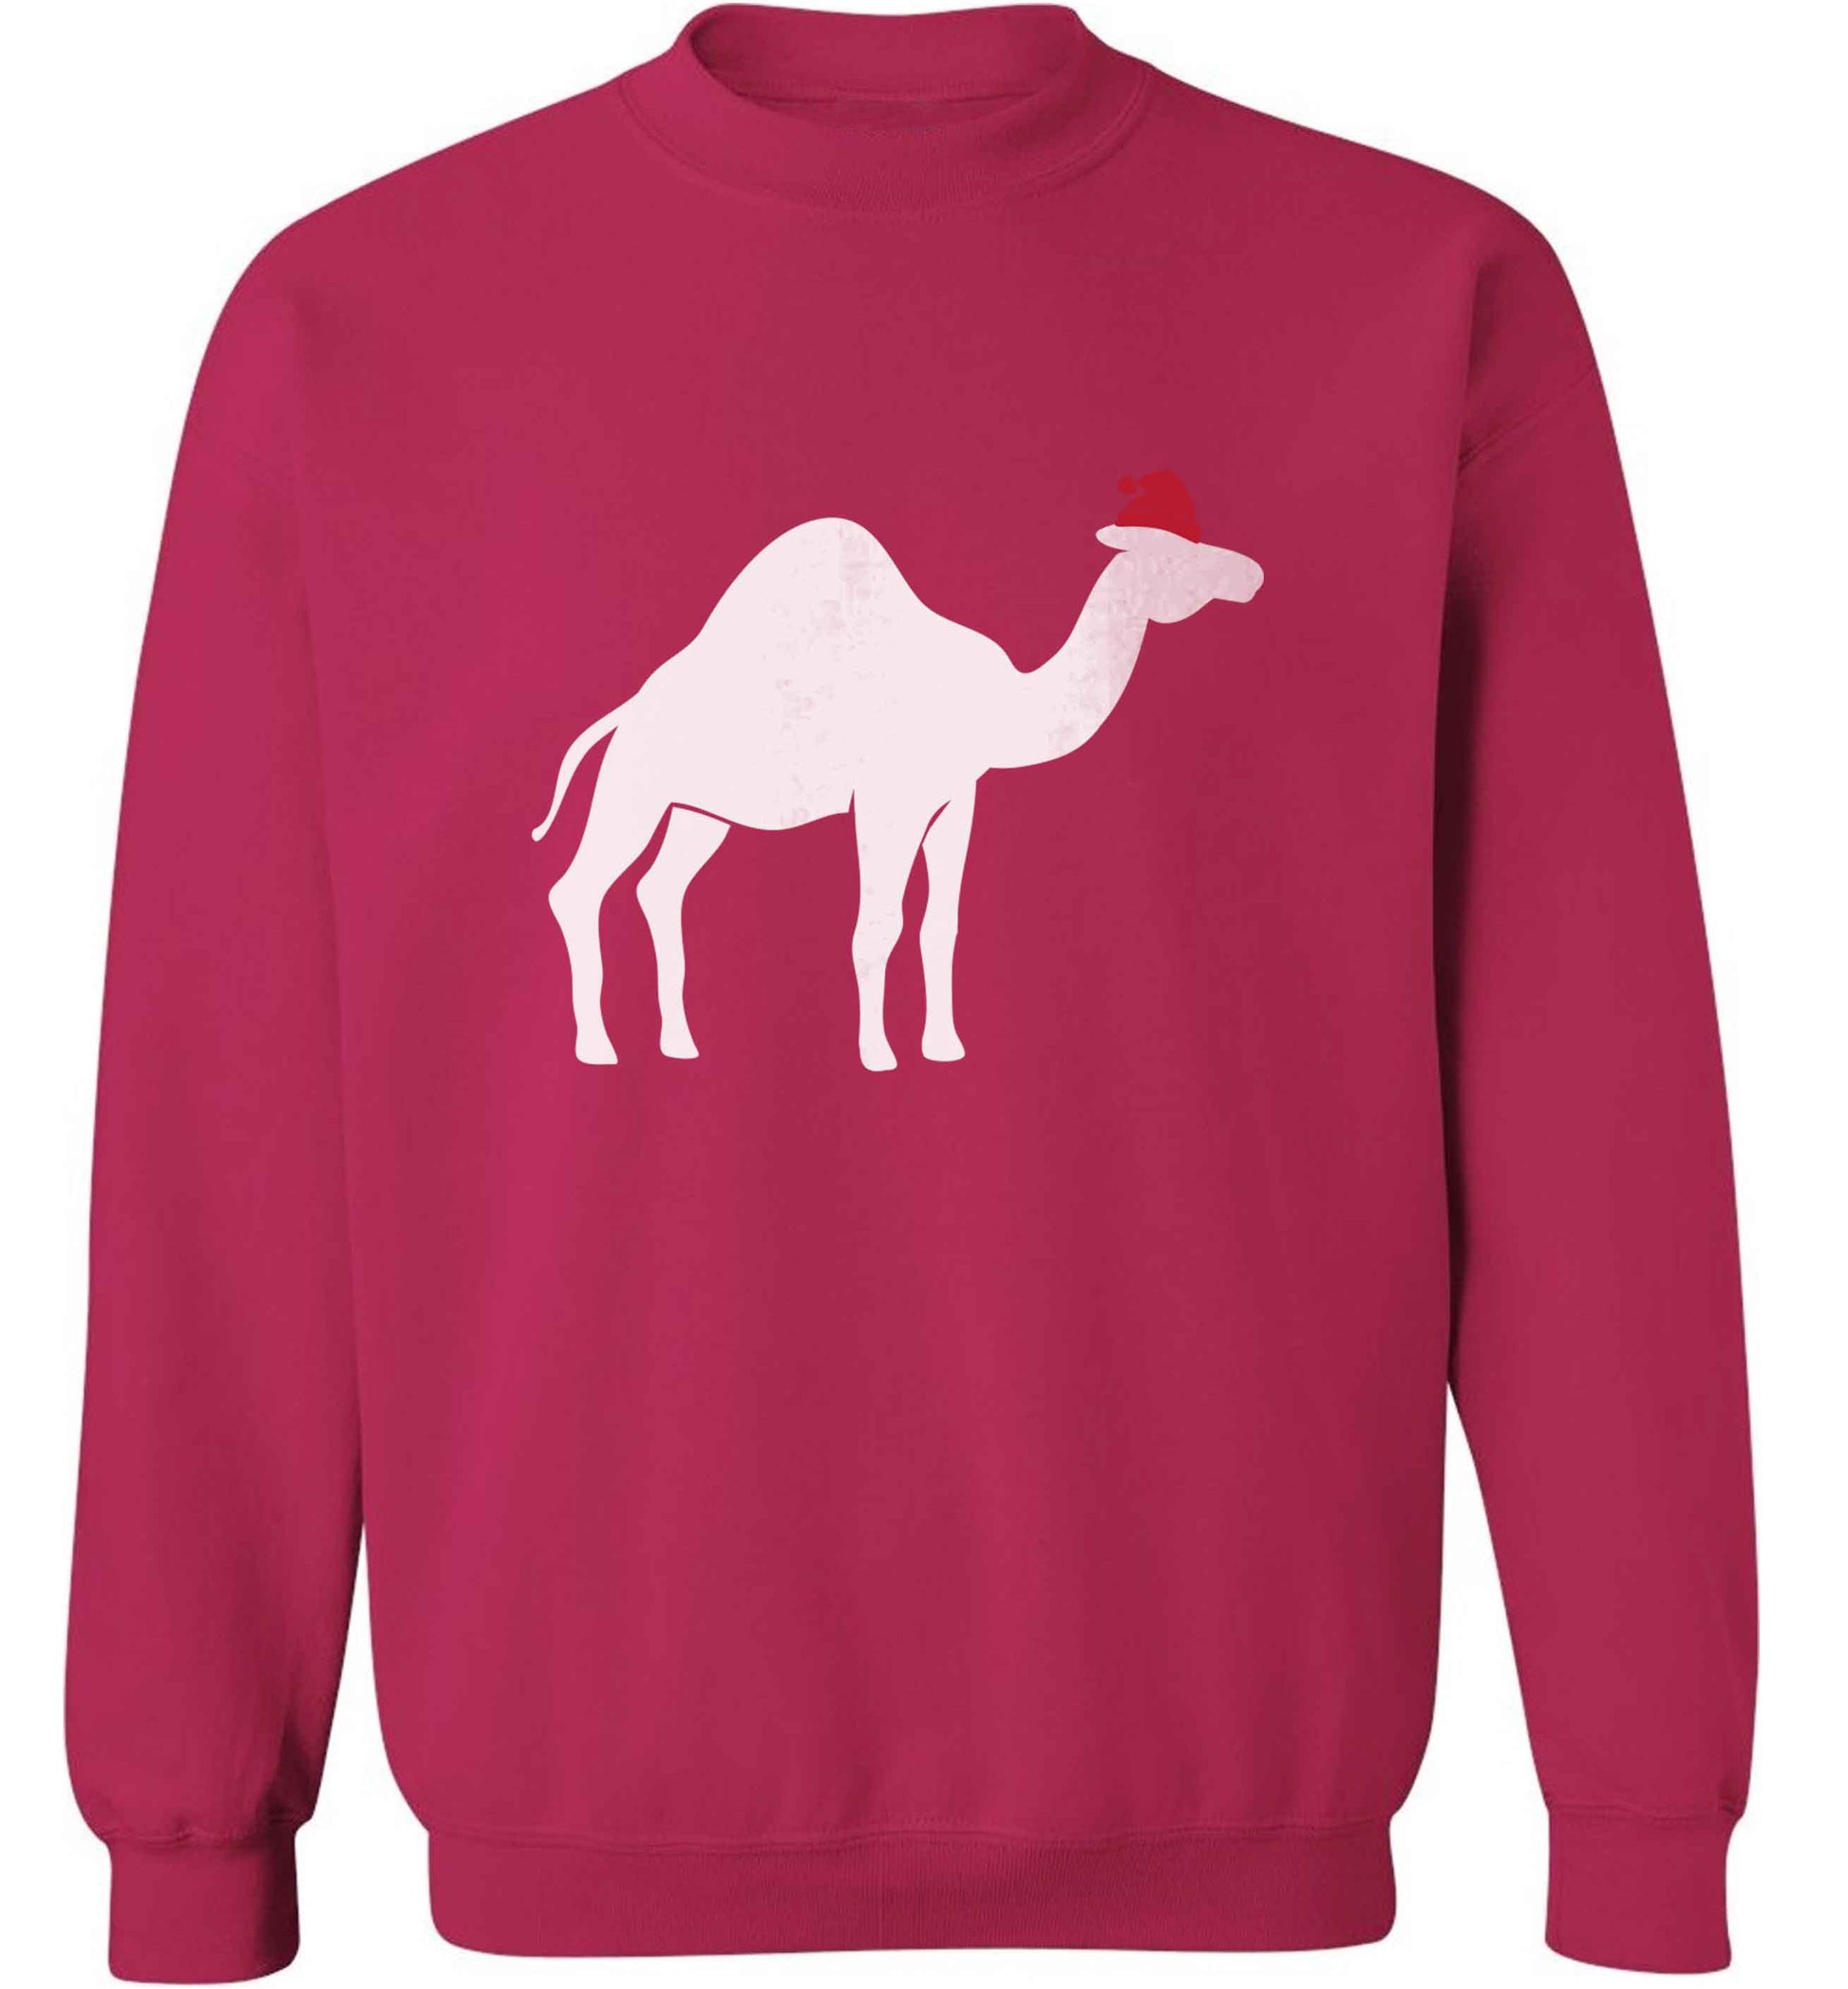 Blue camel santa adult's unisex pink sweater 2XL